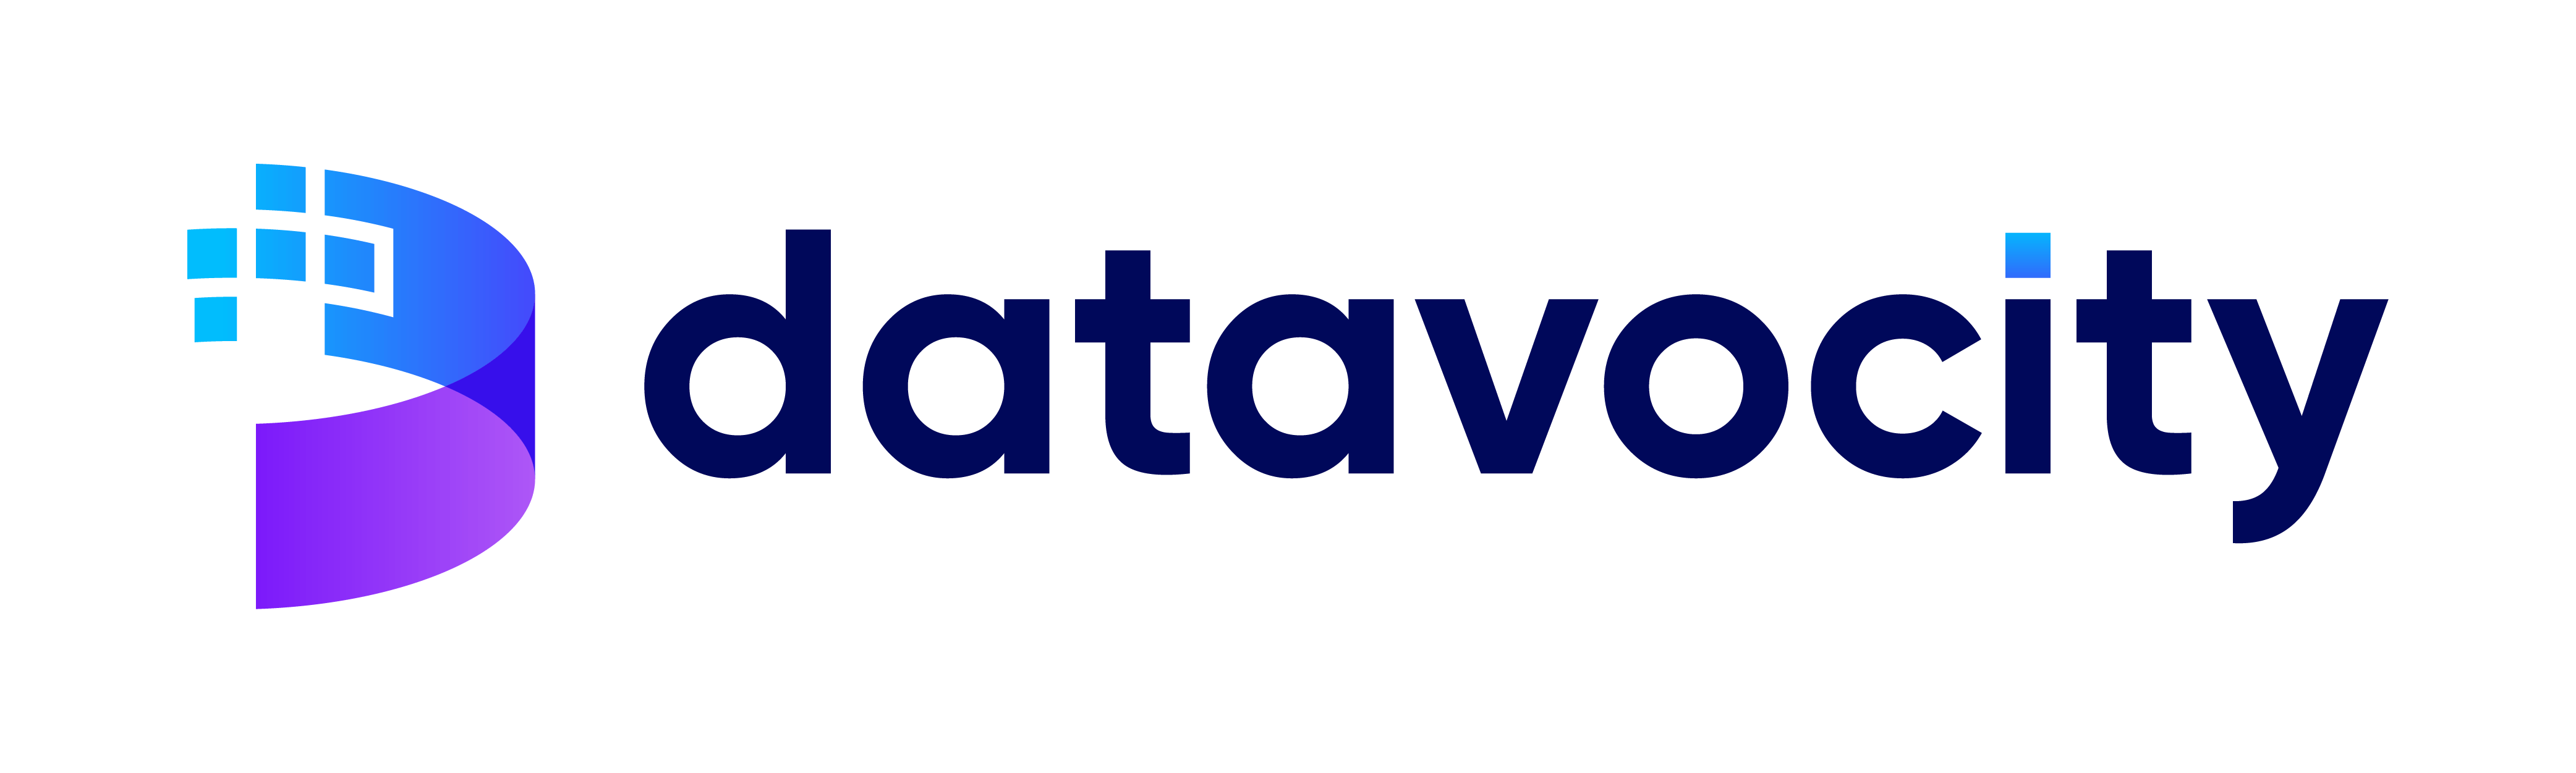 Datavocity-Logo